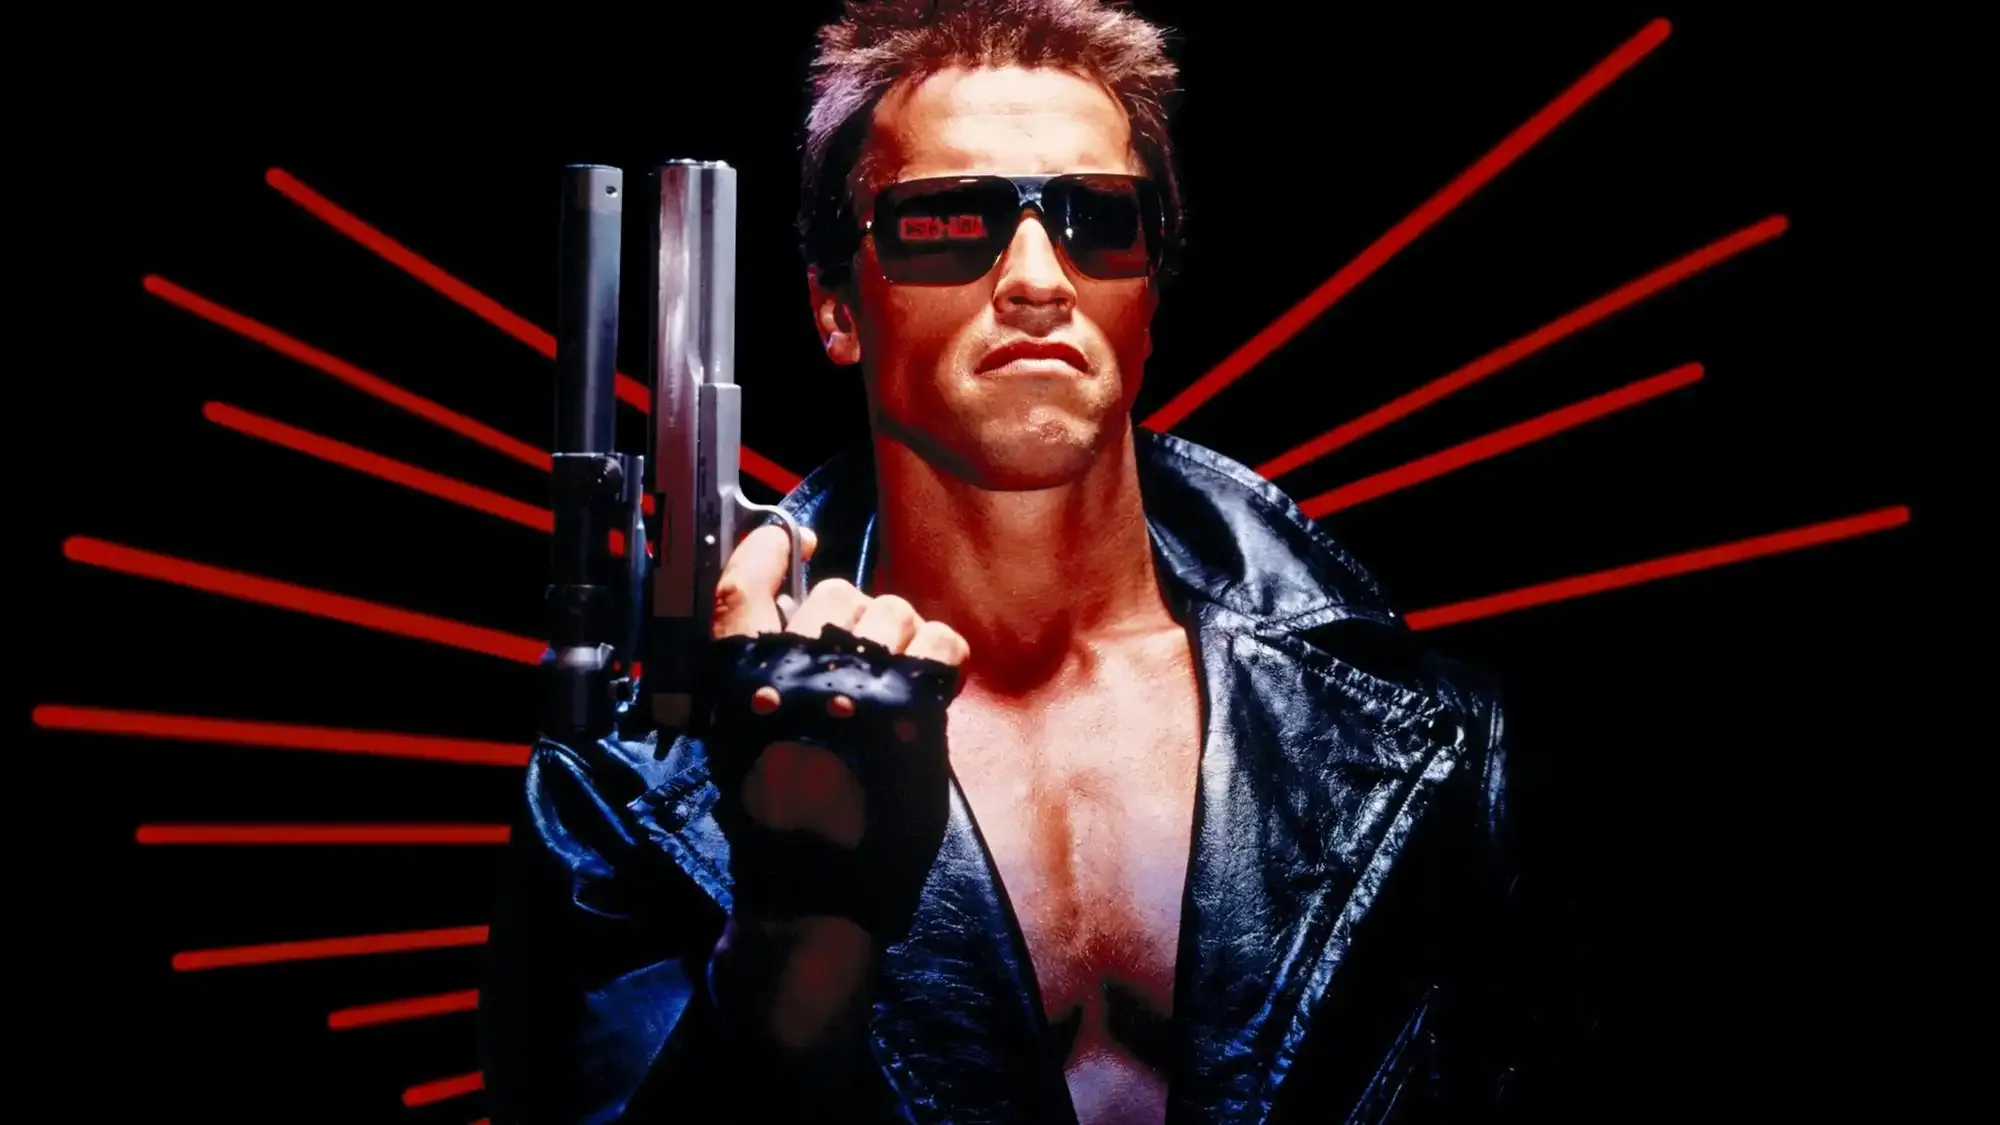 The Terminator movie review